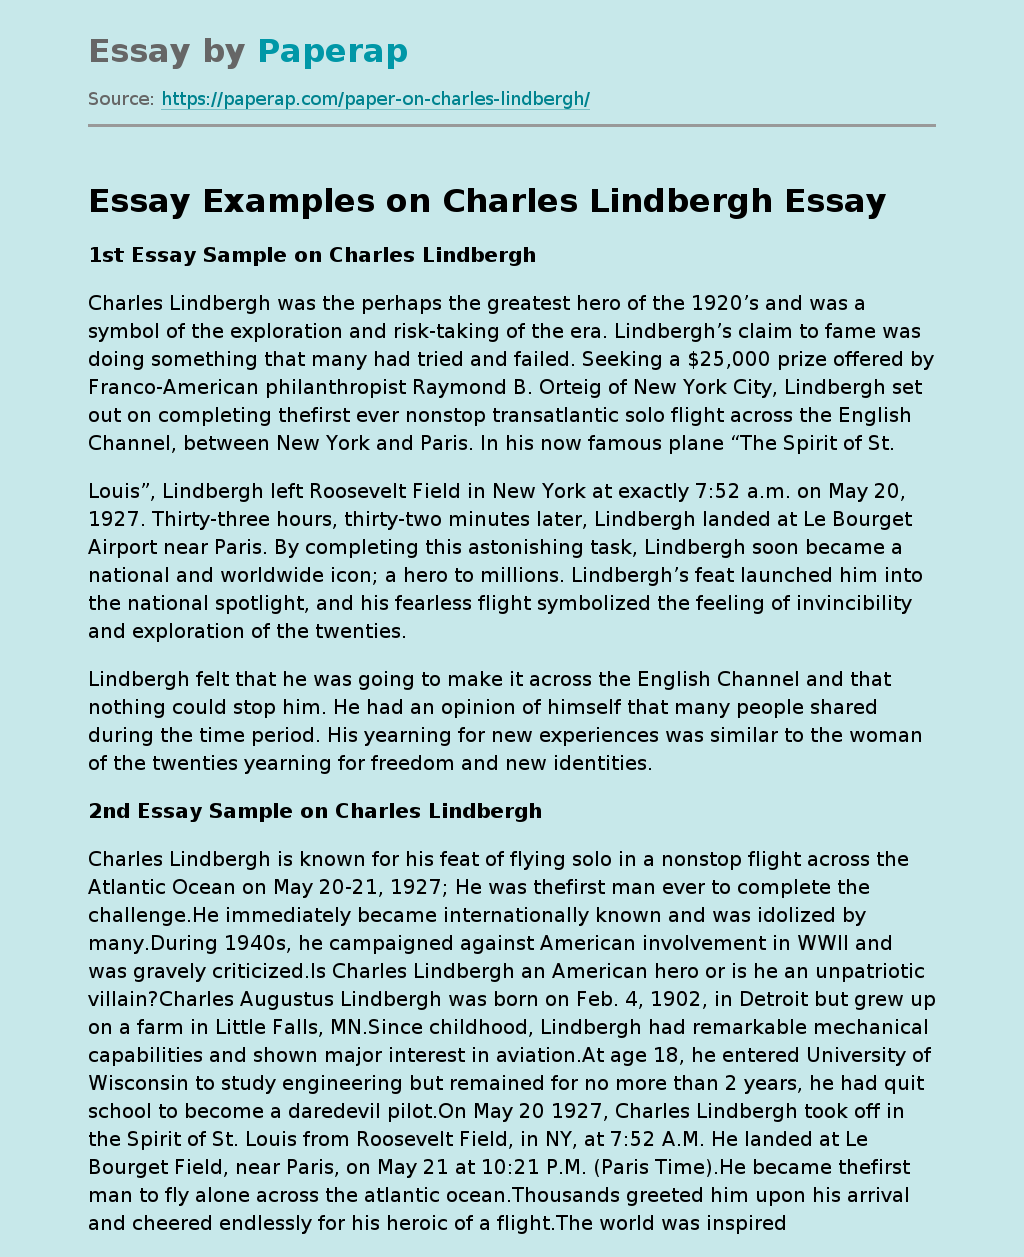 Essay Examples on Charles Lindbergh